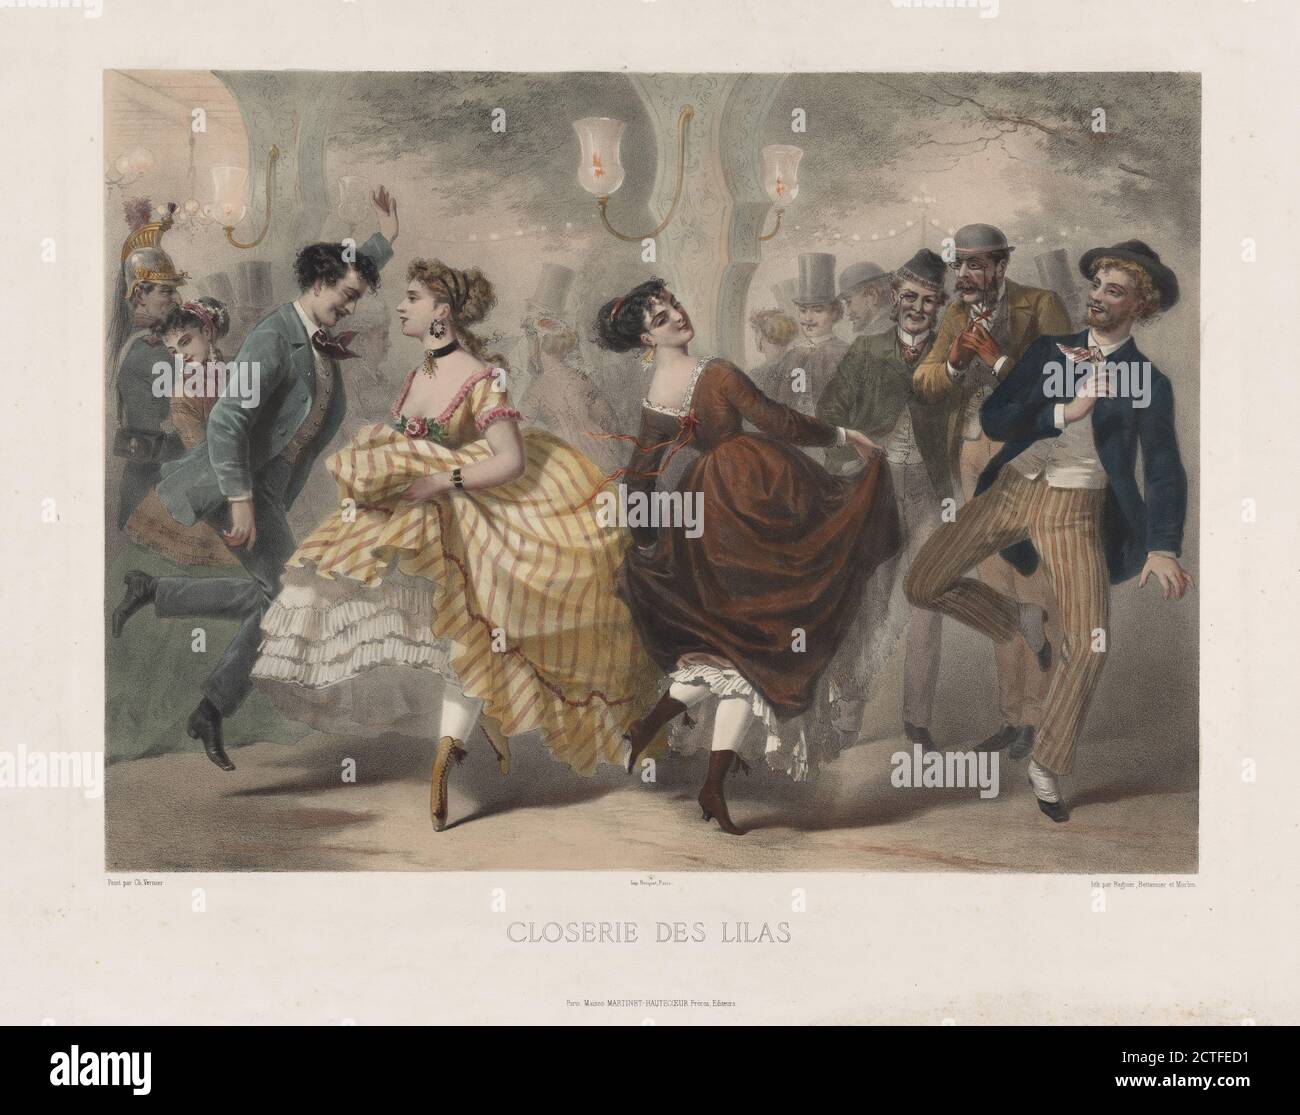 Closerie des lilas, still image, Prints, 1860 - 1869, Regnier, Claude, Vernier, Charles, 1831-1887, Bettannier, Joseph, Morlon, A Stock Photo